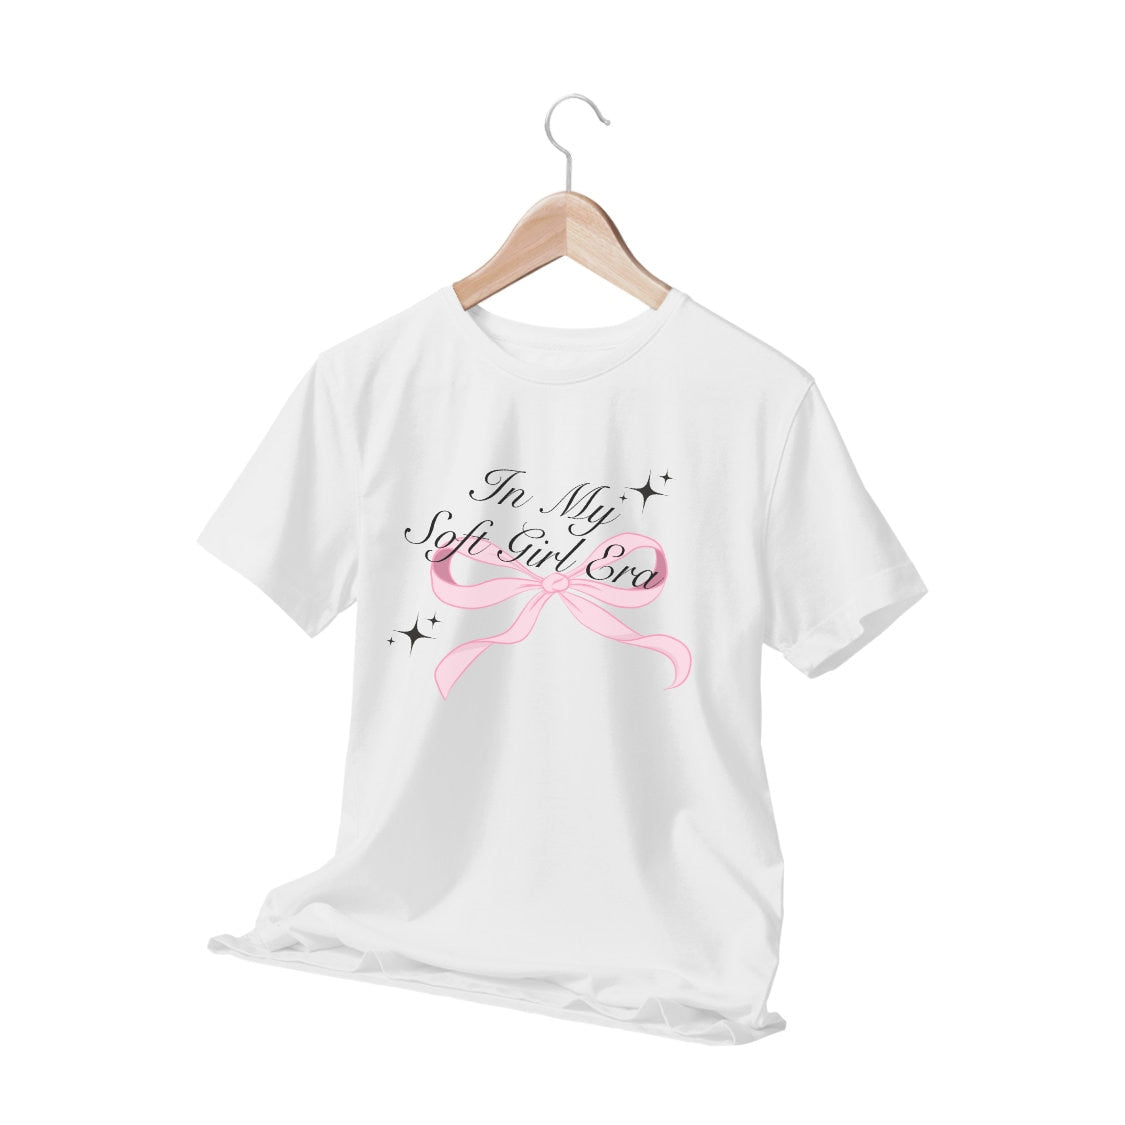 COQUETTE BOW in my soft girl era T-shirt | Graphic Tee | Pretty t-shirt | Pink t-shirt, Classy t- shirt | girly gift | Glamorous t-shirt